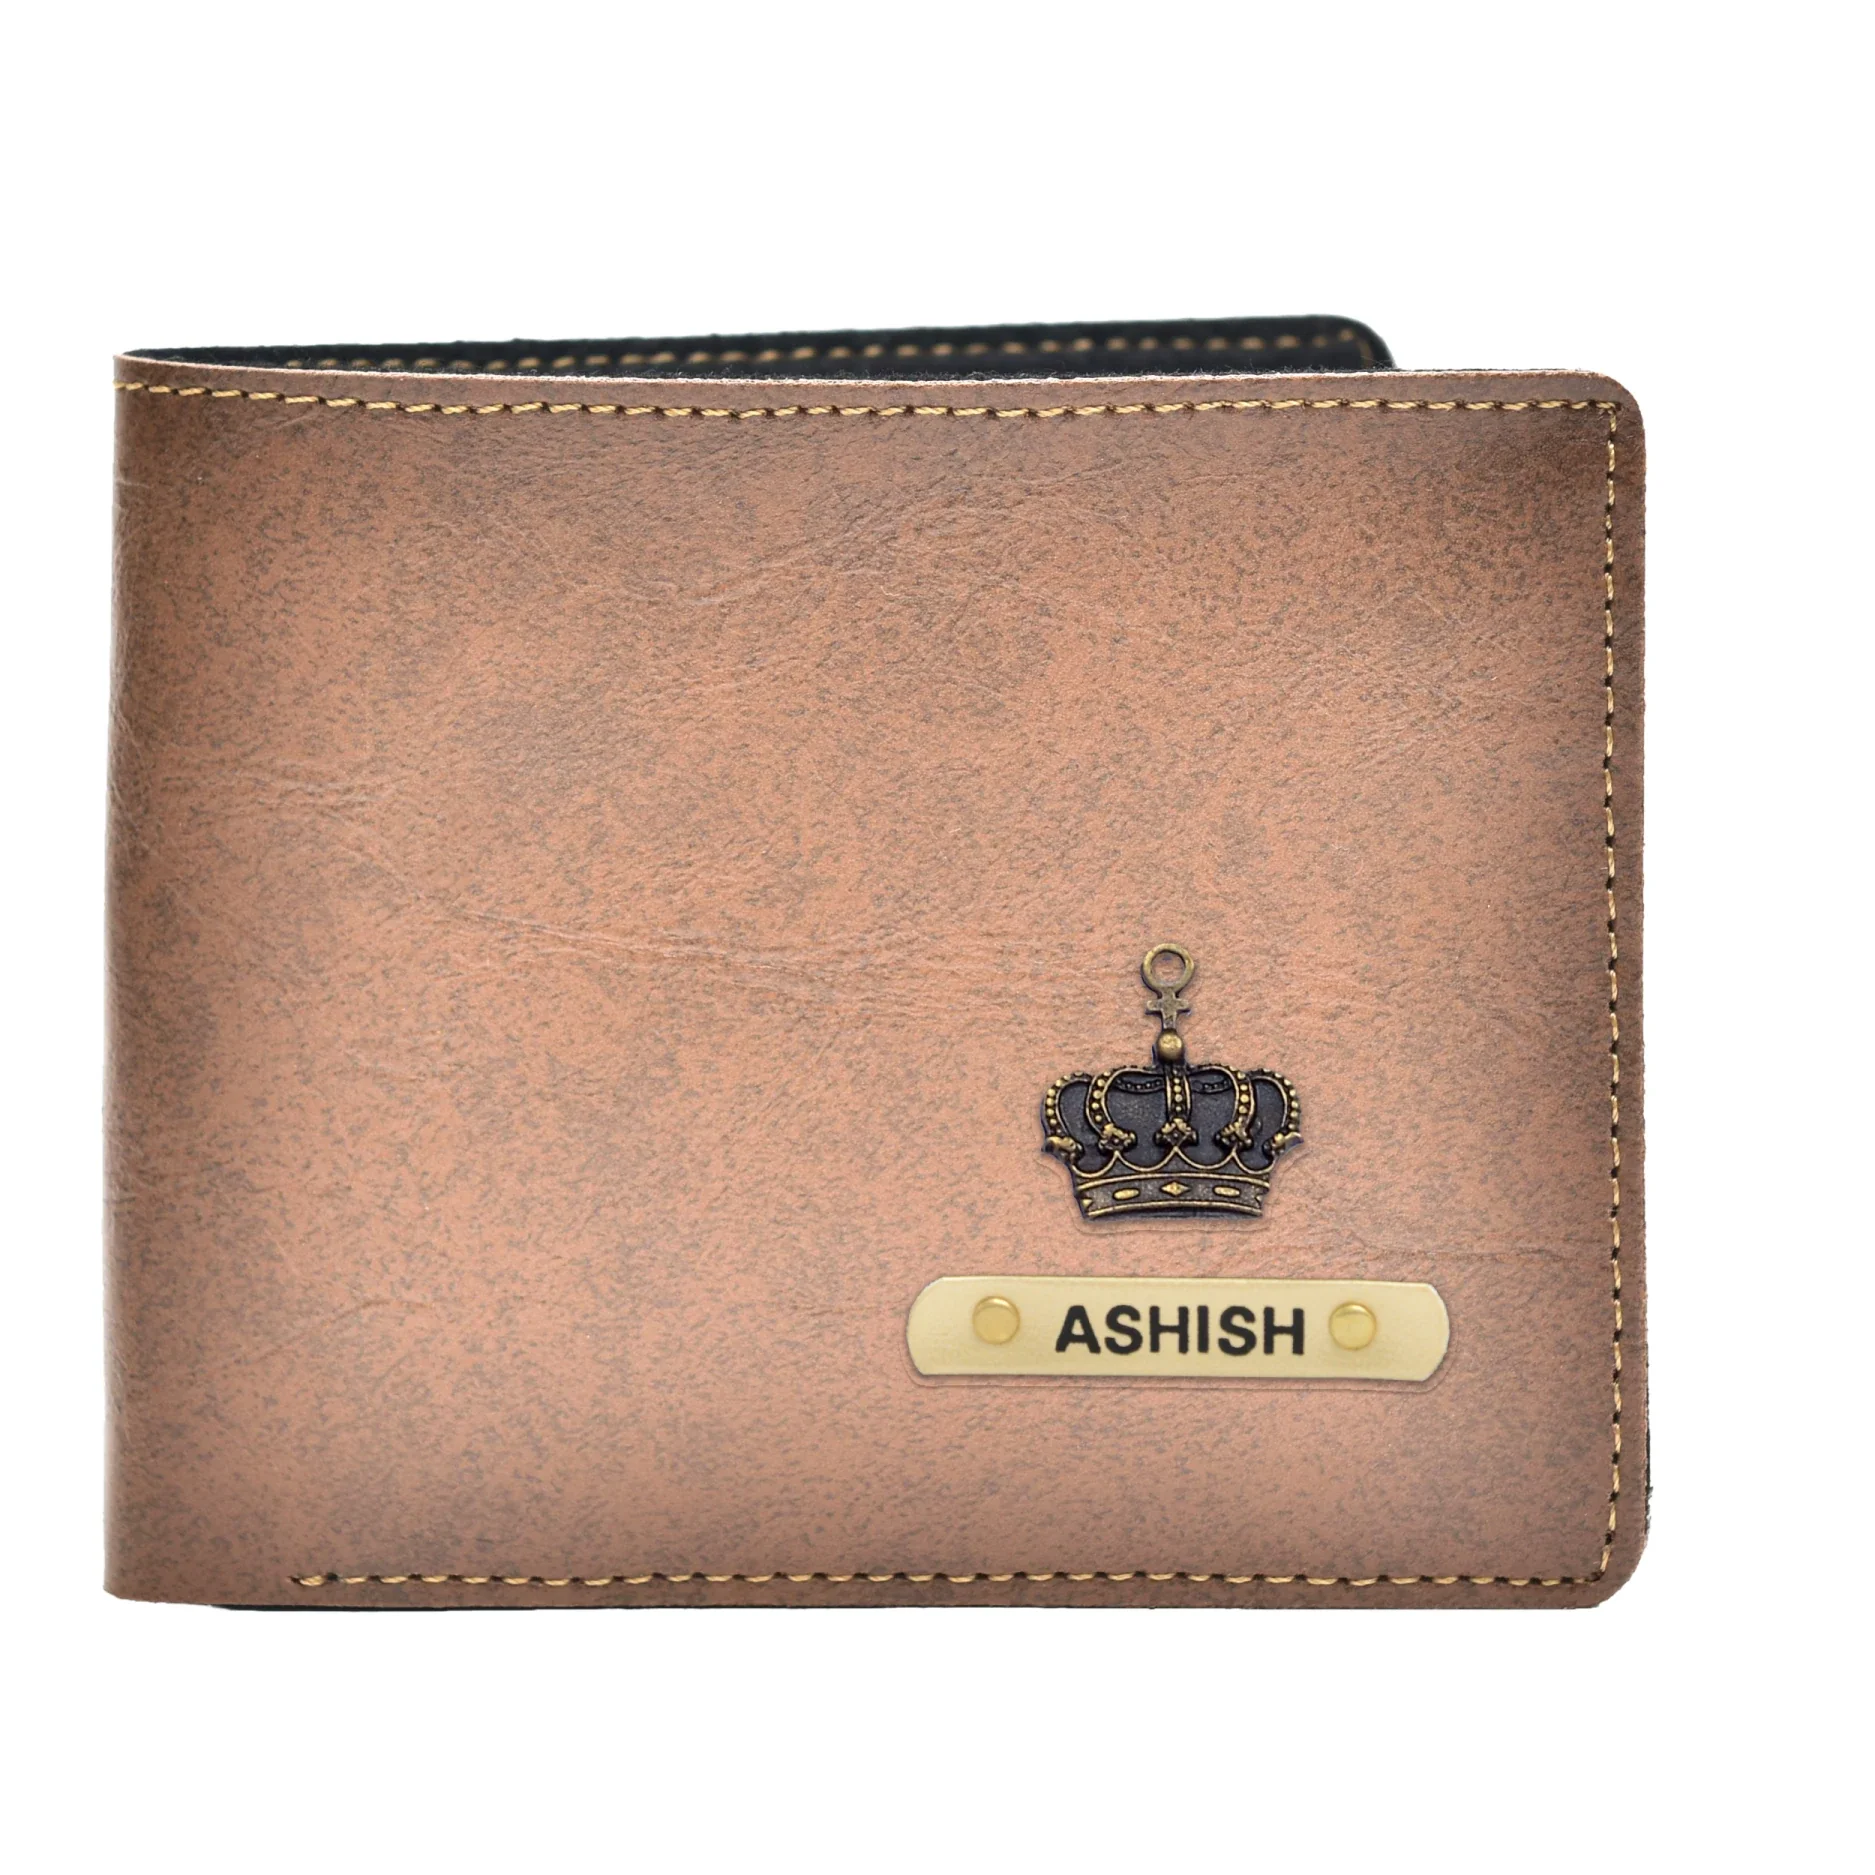 Buy Fastrack Pink Solid Medium Tote Handbag Online At Best Price @ Tata CLiQ